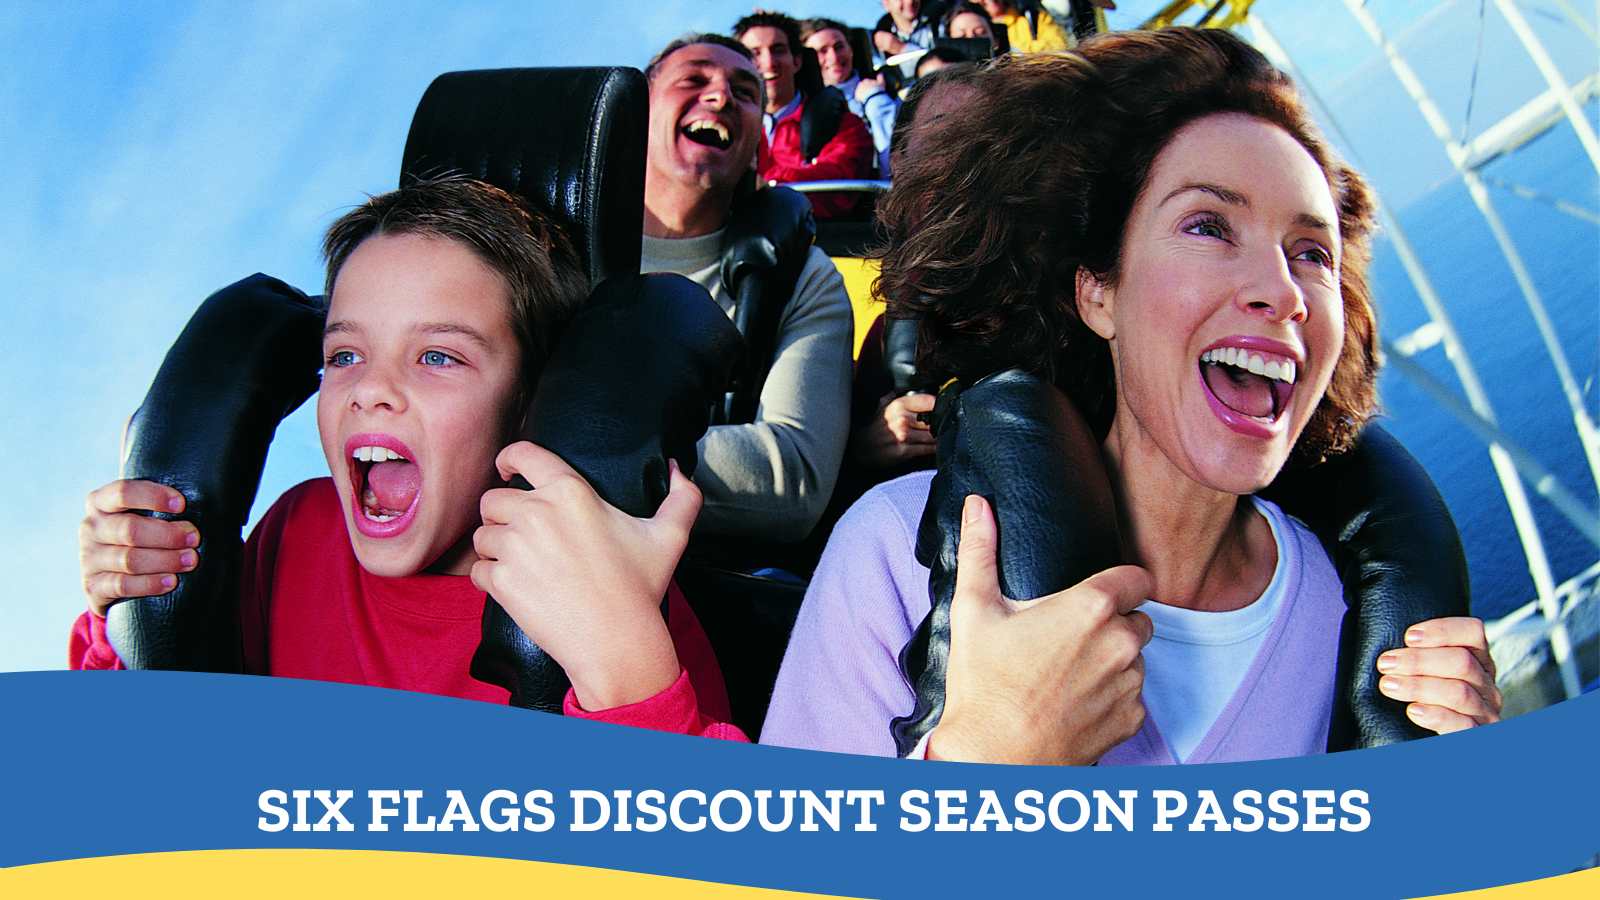 Great America Season Pass Costco: Save Big and Enjoy Unlimited Thrills!